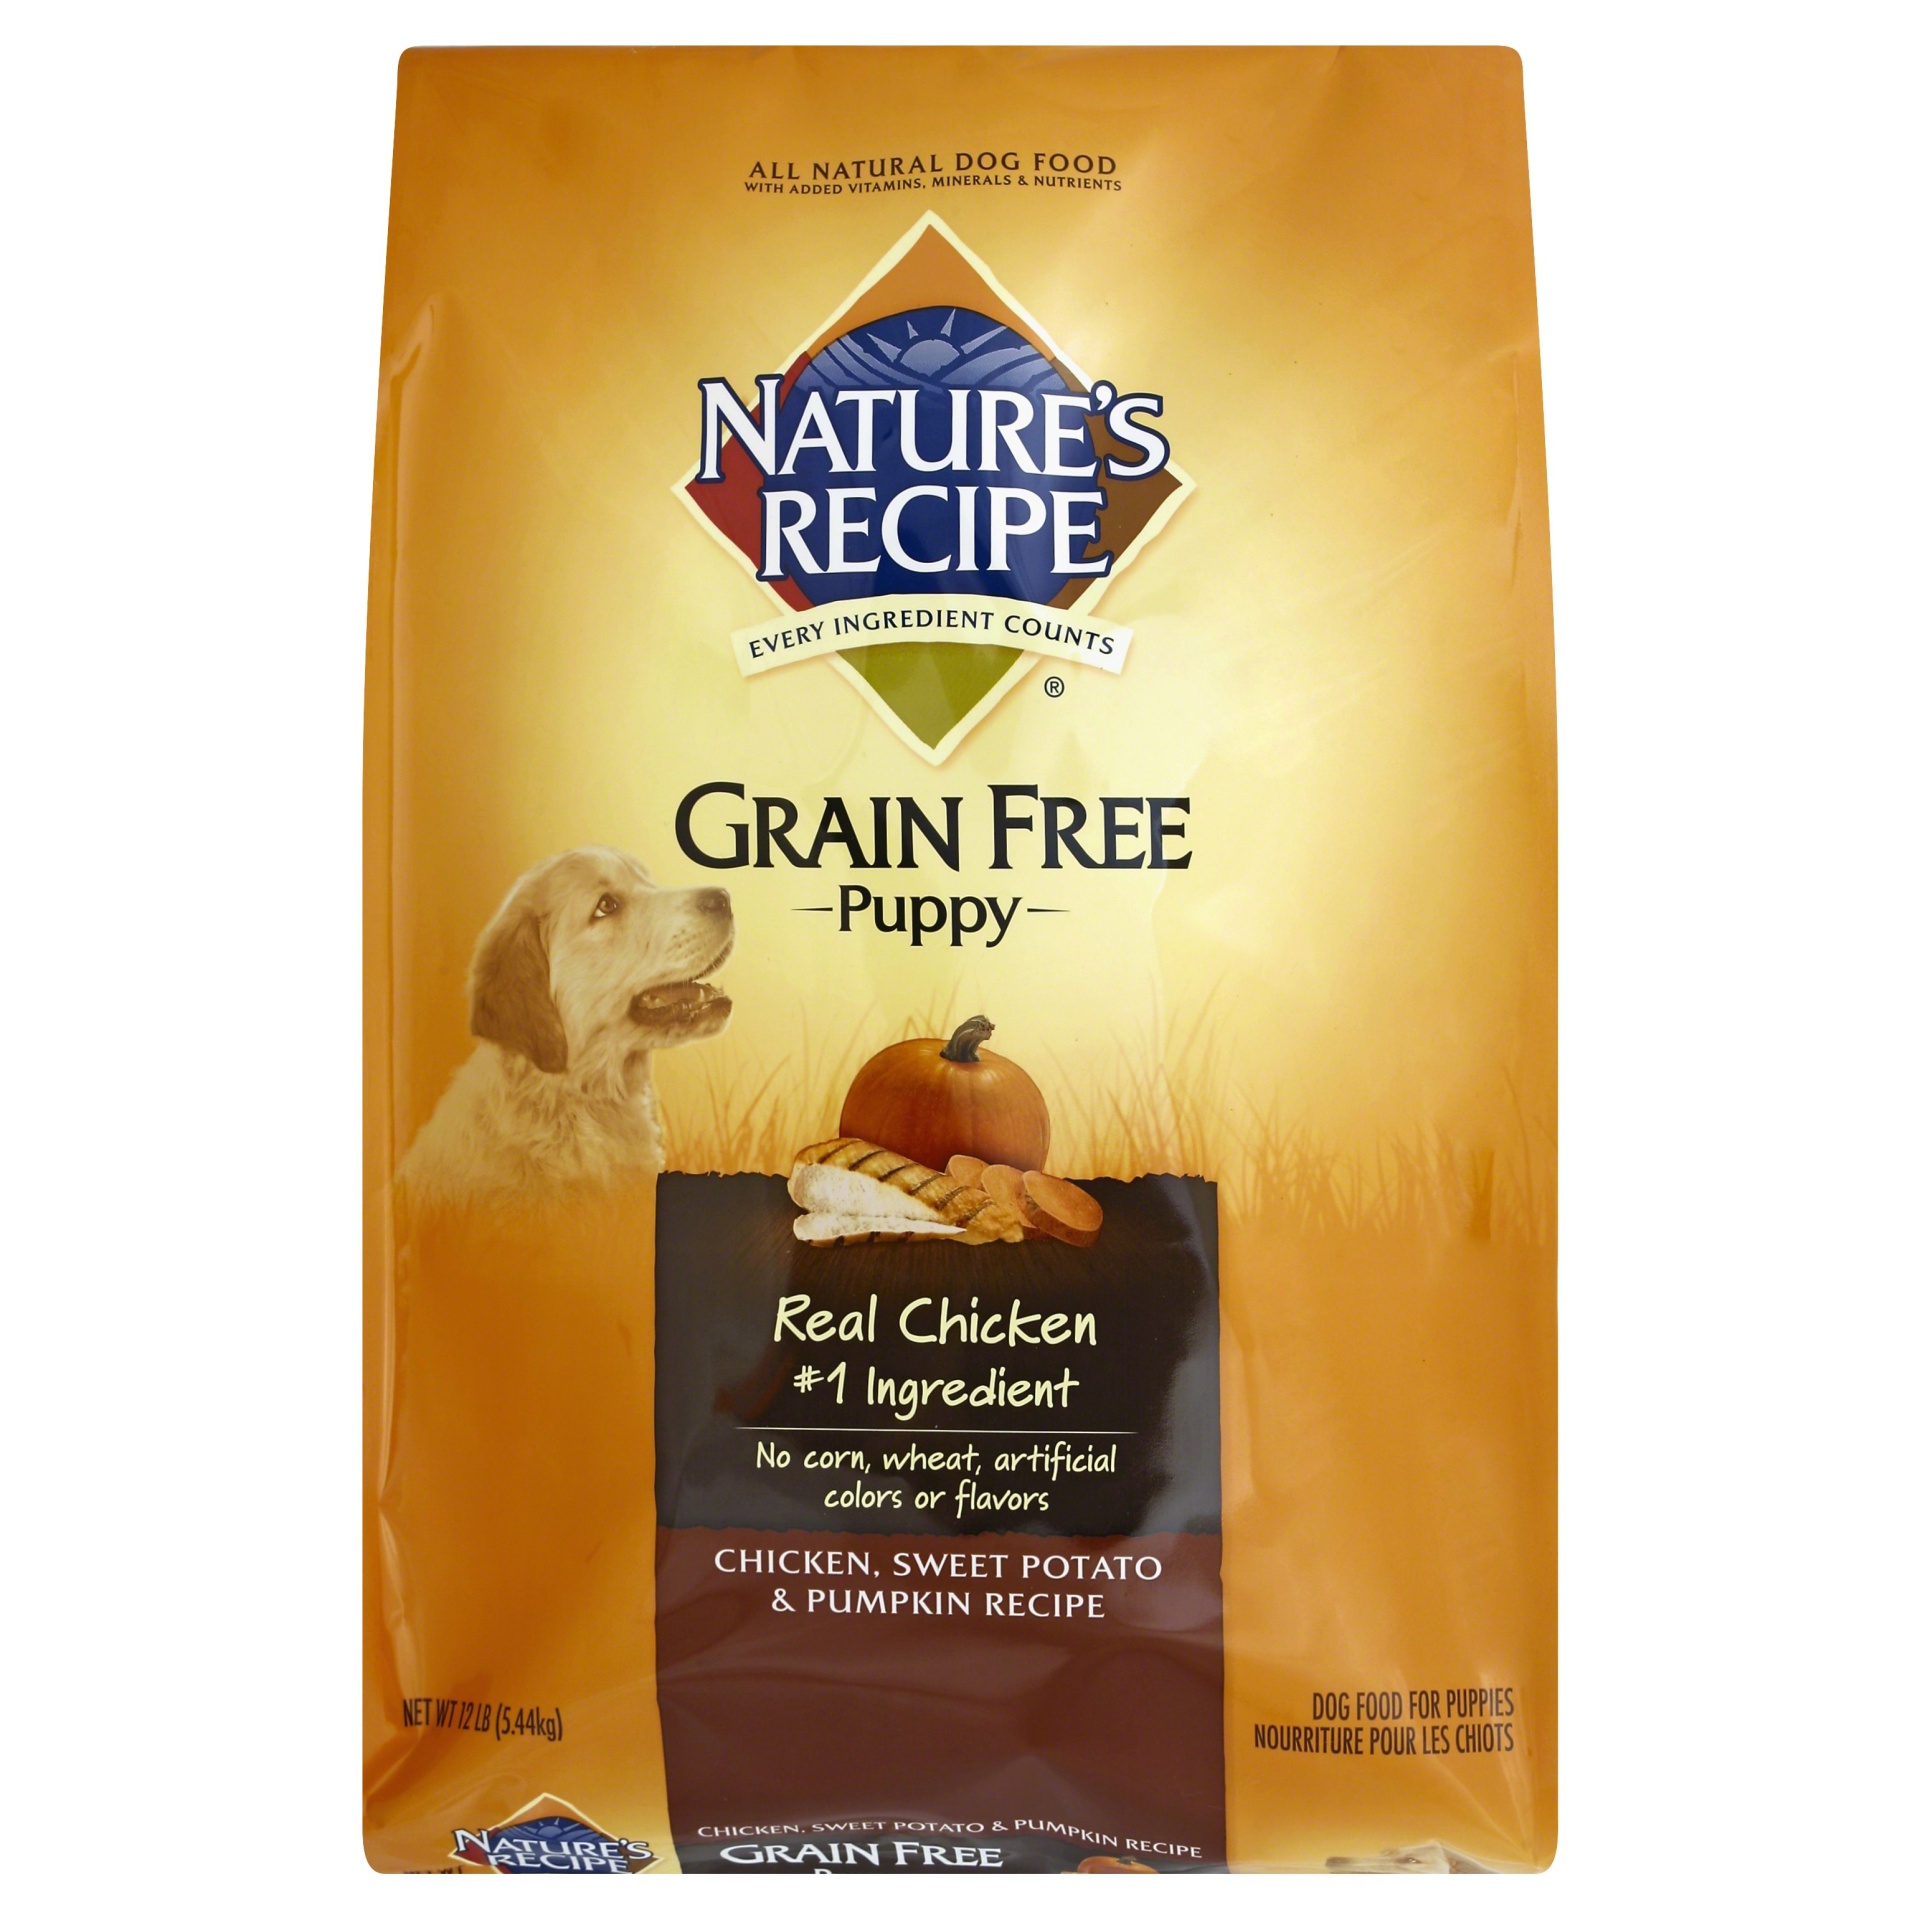 Nature's Recipe Grain Free Puppy (Chicken Sweet Potato & Pumpkin) - Dry